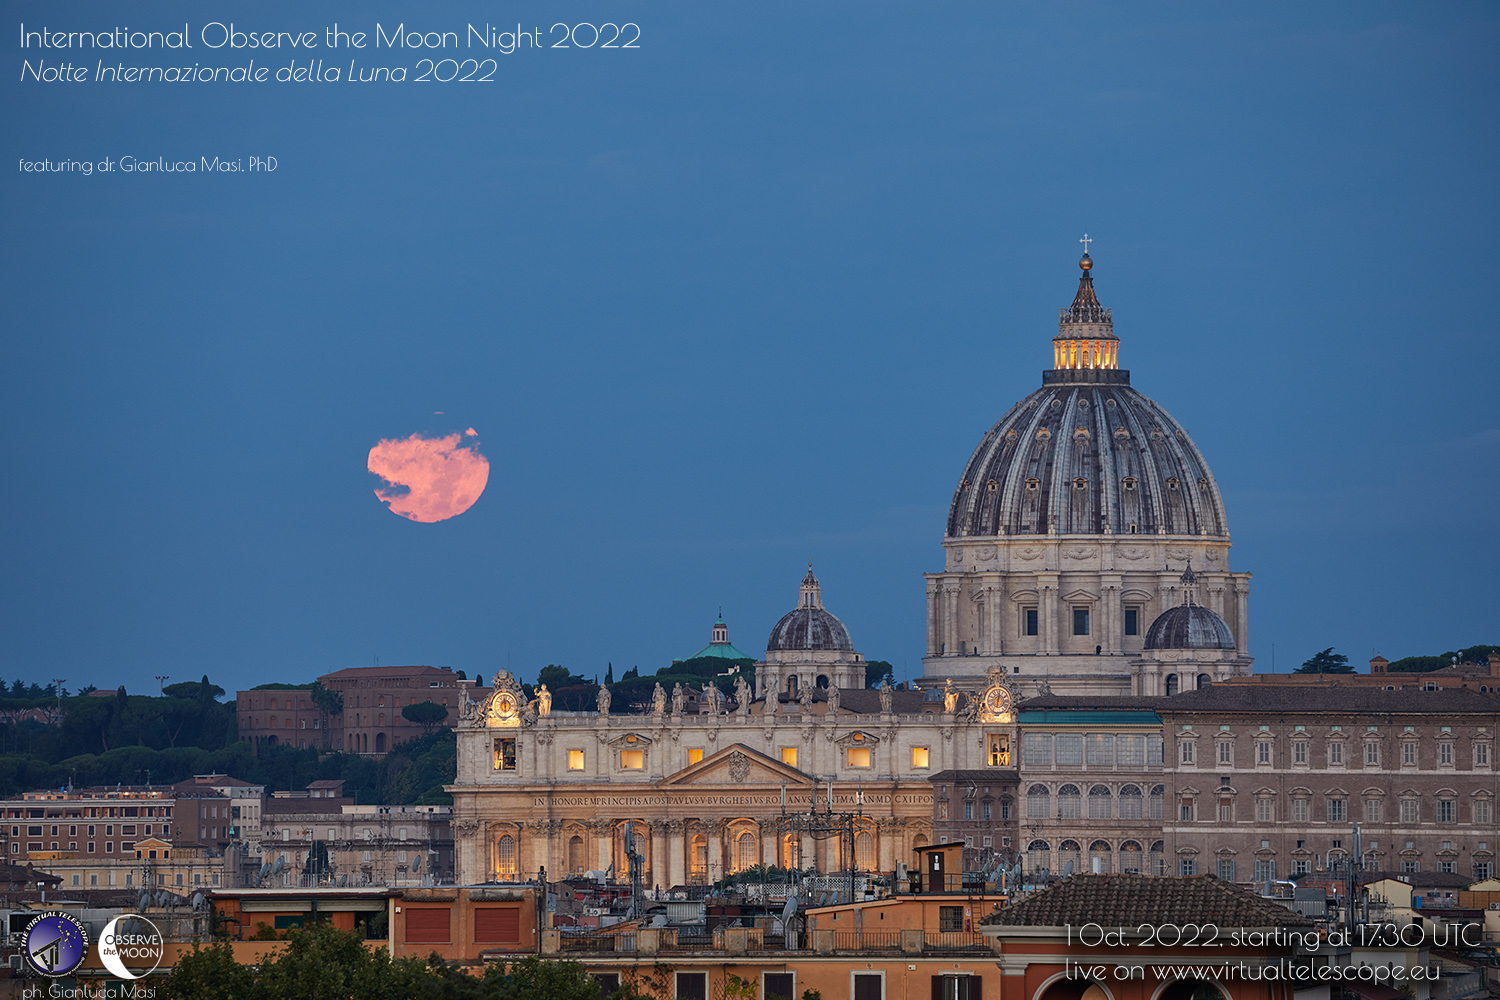 International Observe the Moon Night 2022: online observation - 1 Oct. 2022.